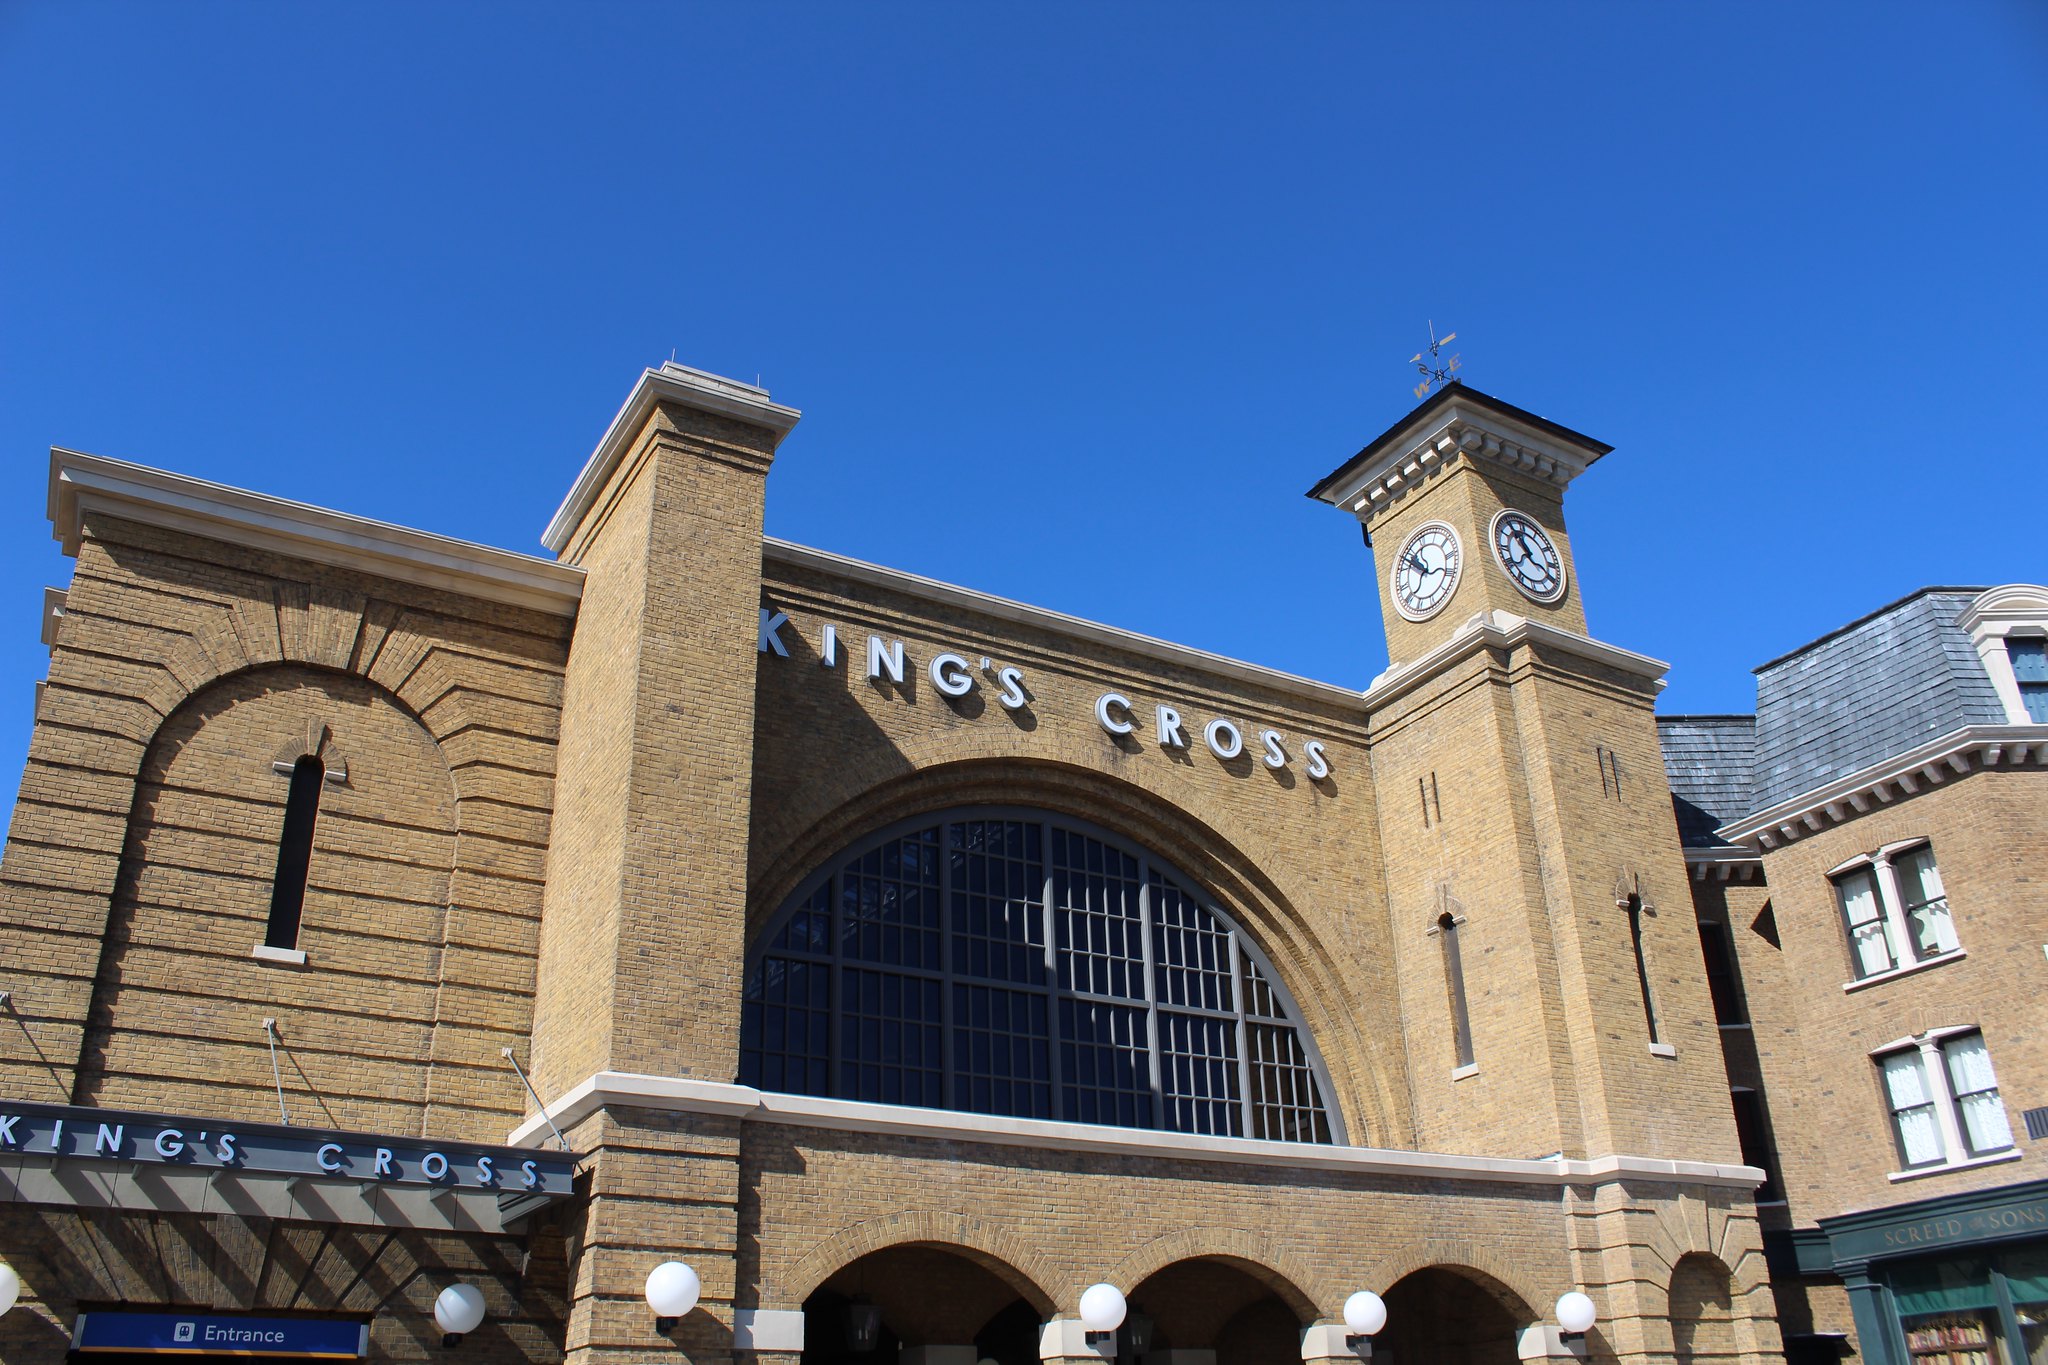 Hogswarts Express, Kings Cross Station Universal